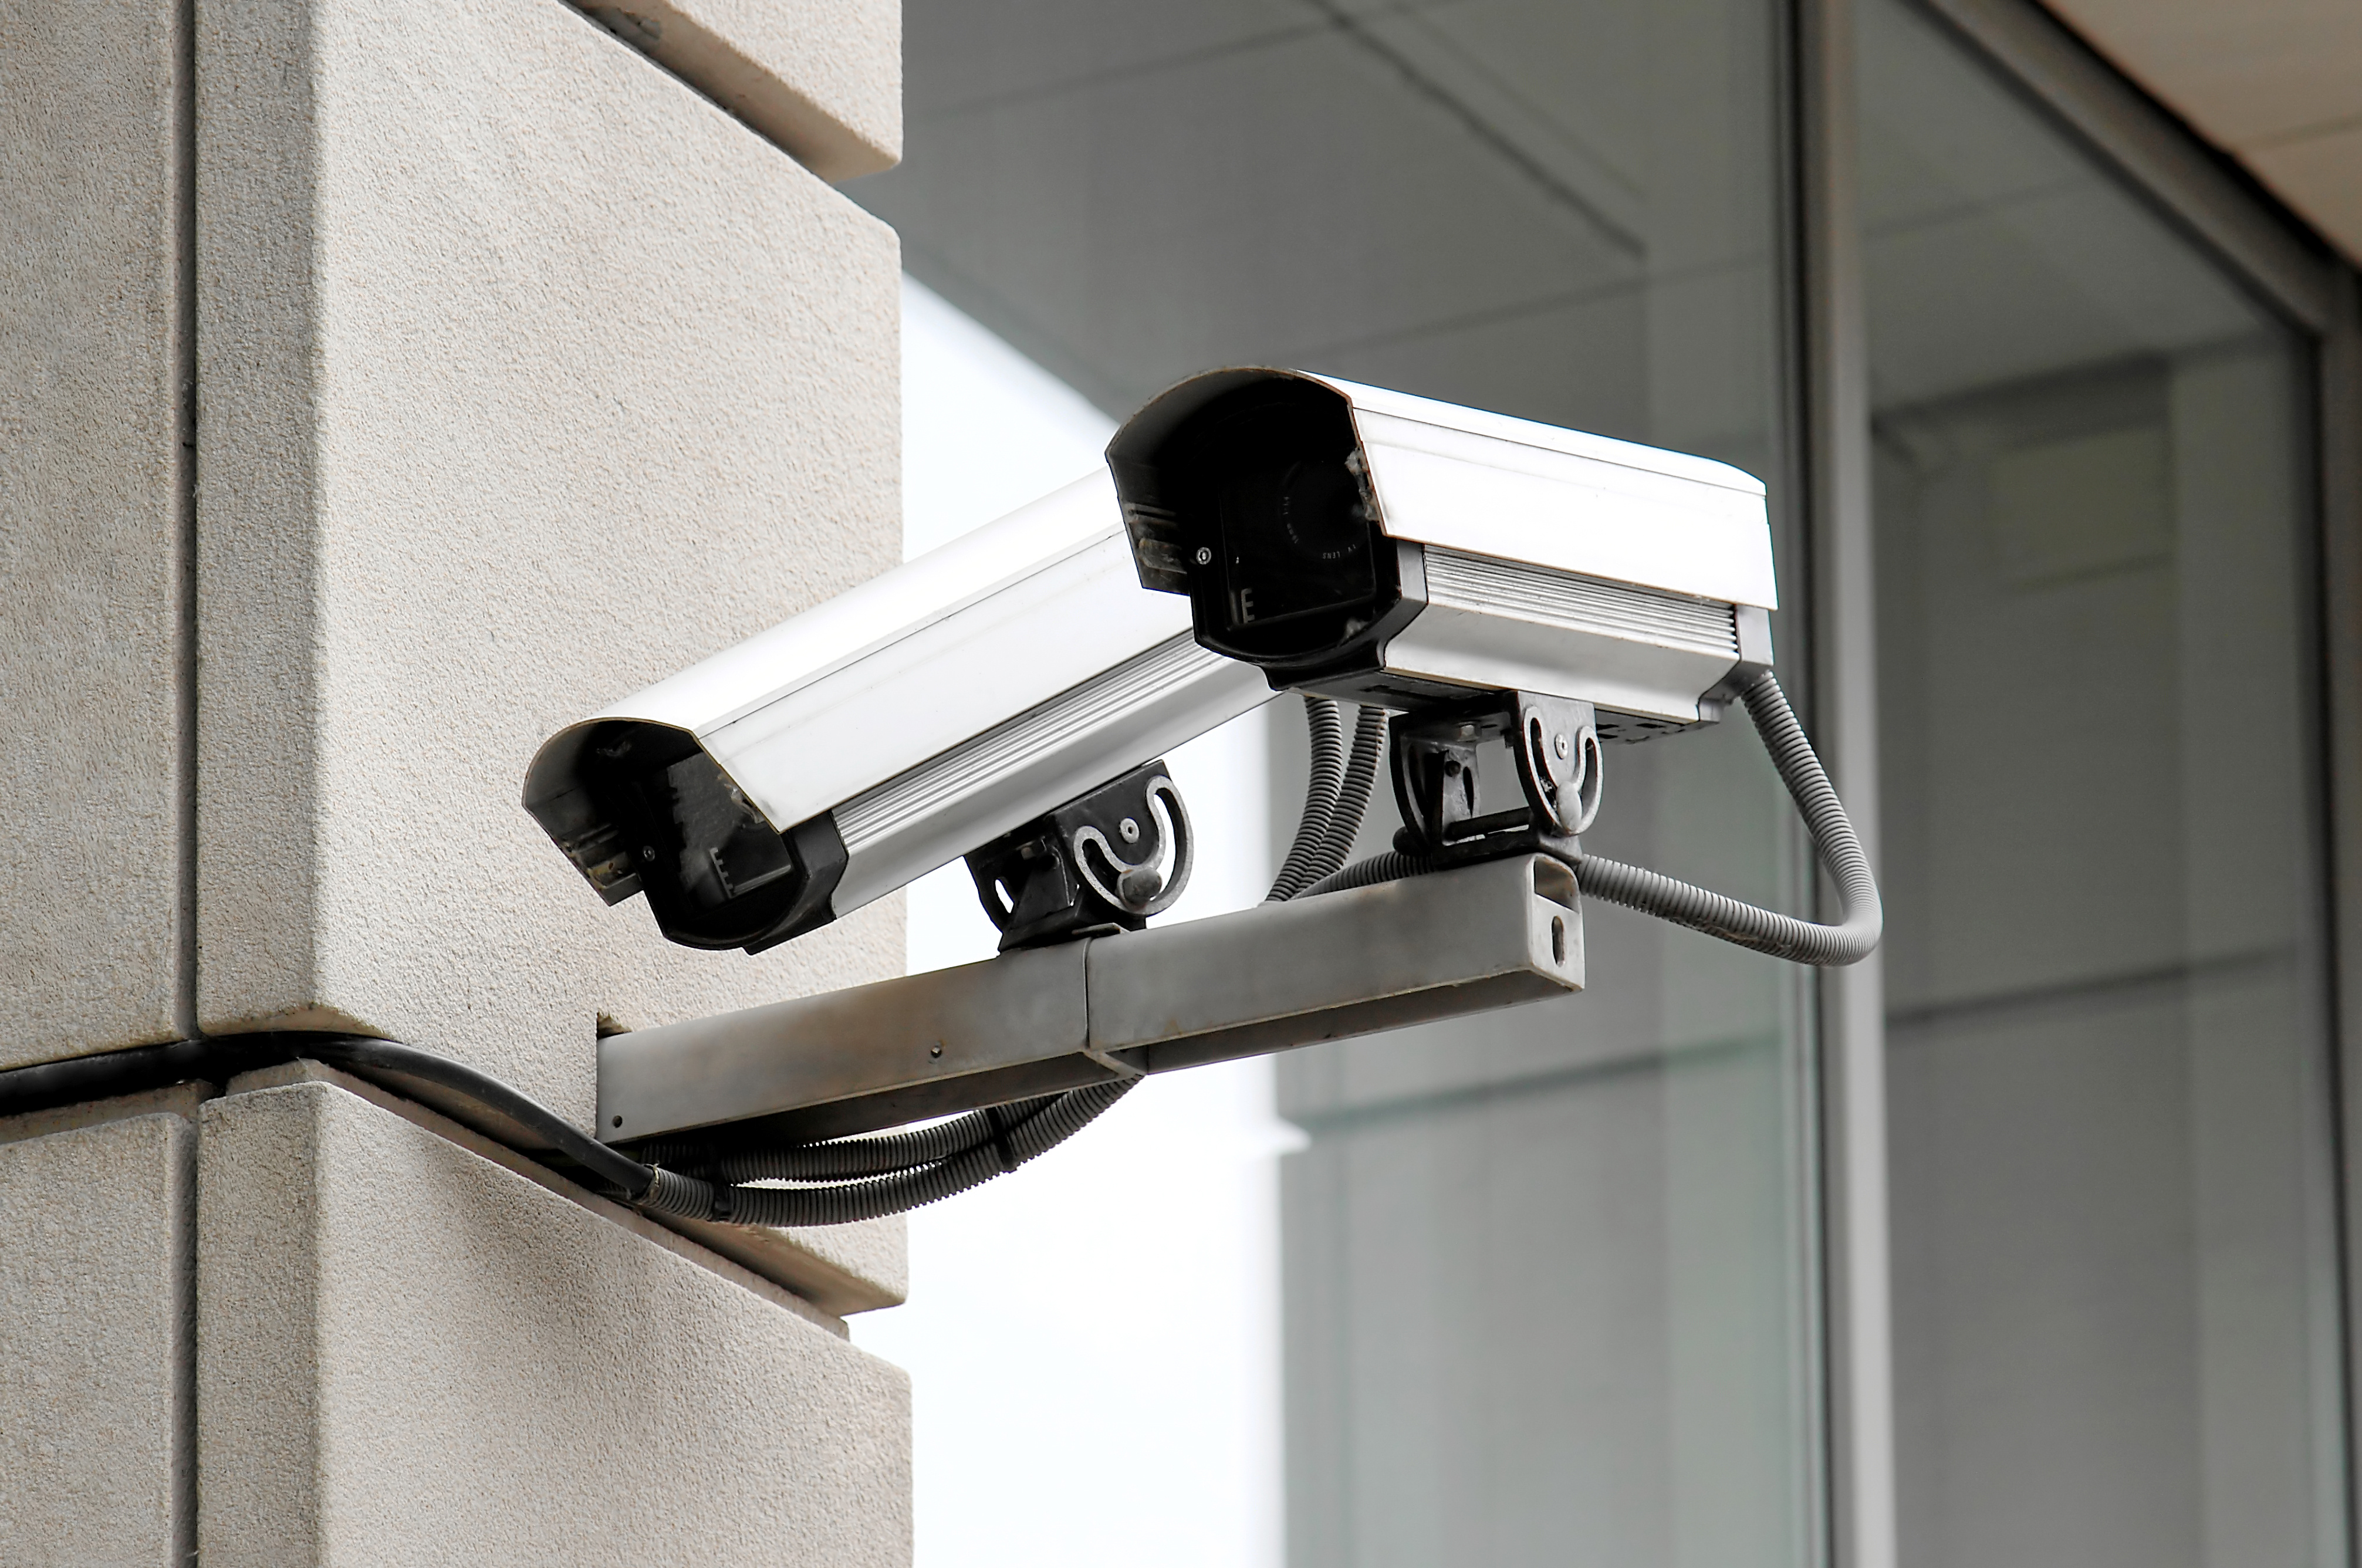 Advantages of Home Security Cameras